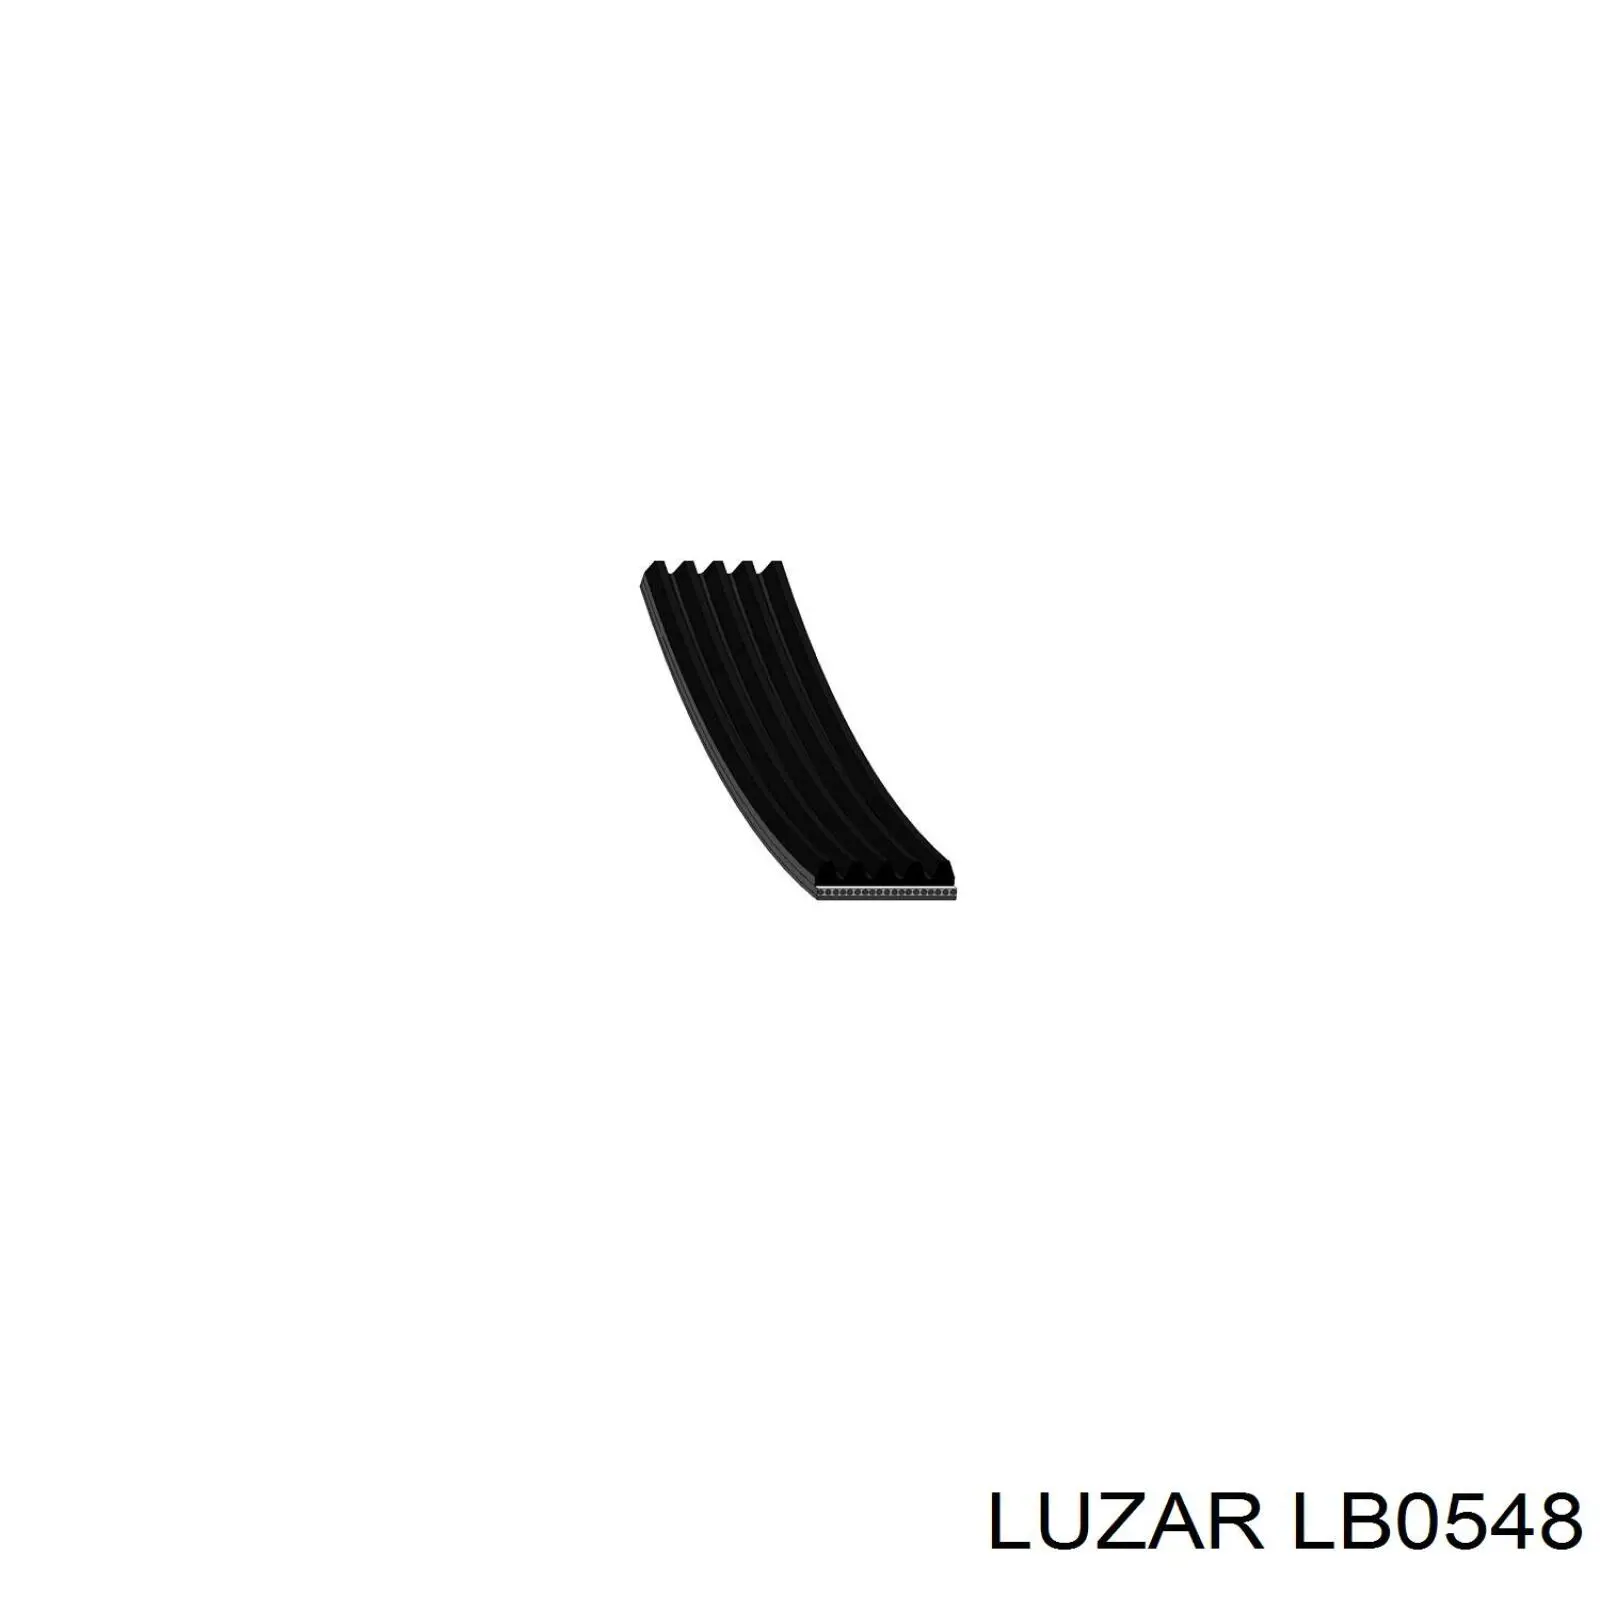 LB0548 Luzar correa trapezoidal